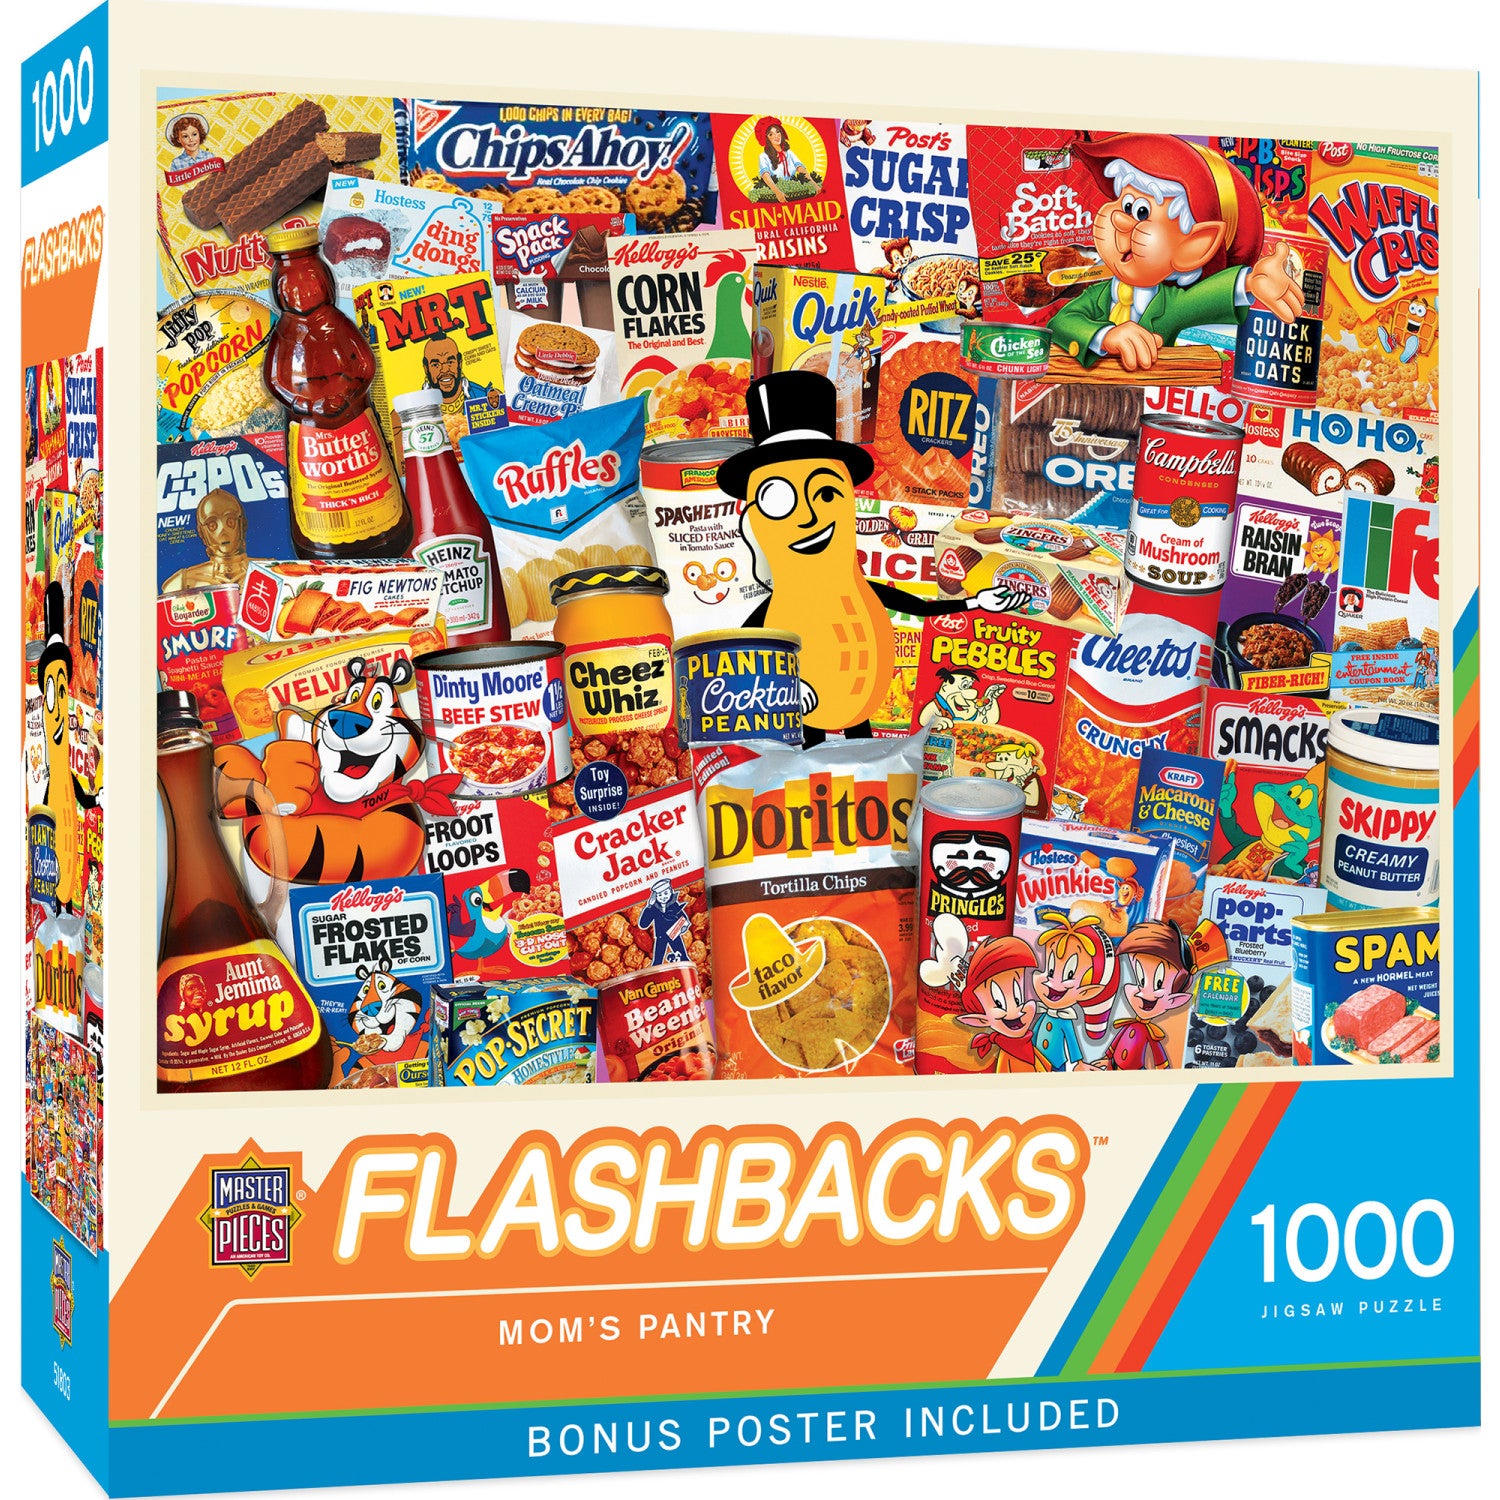 Flashbacks - Mom's Pantry 1000 Piece Puzzle